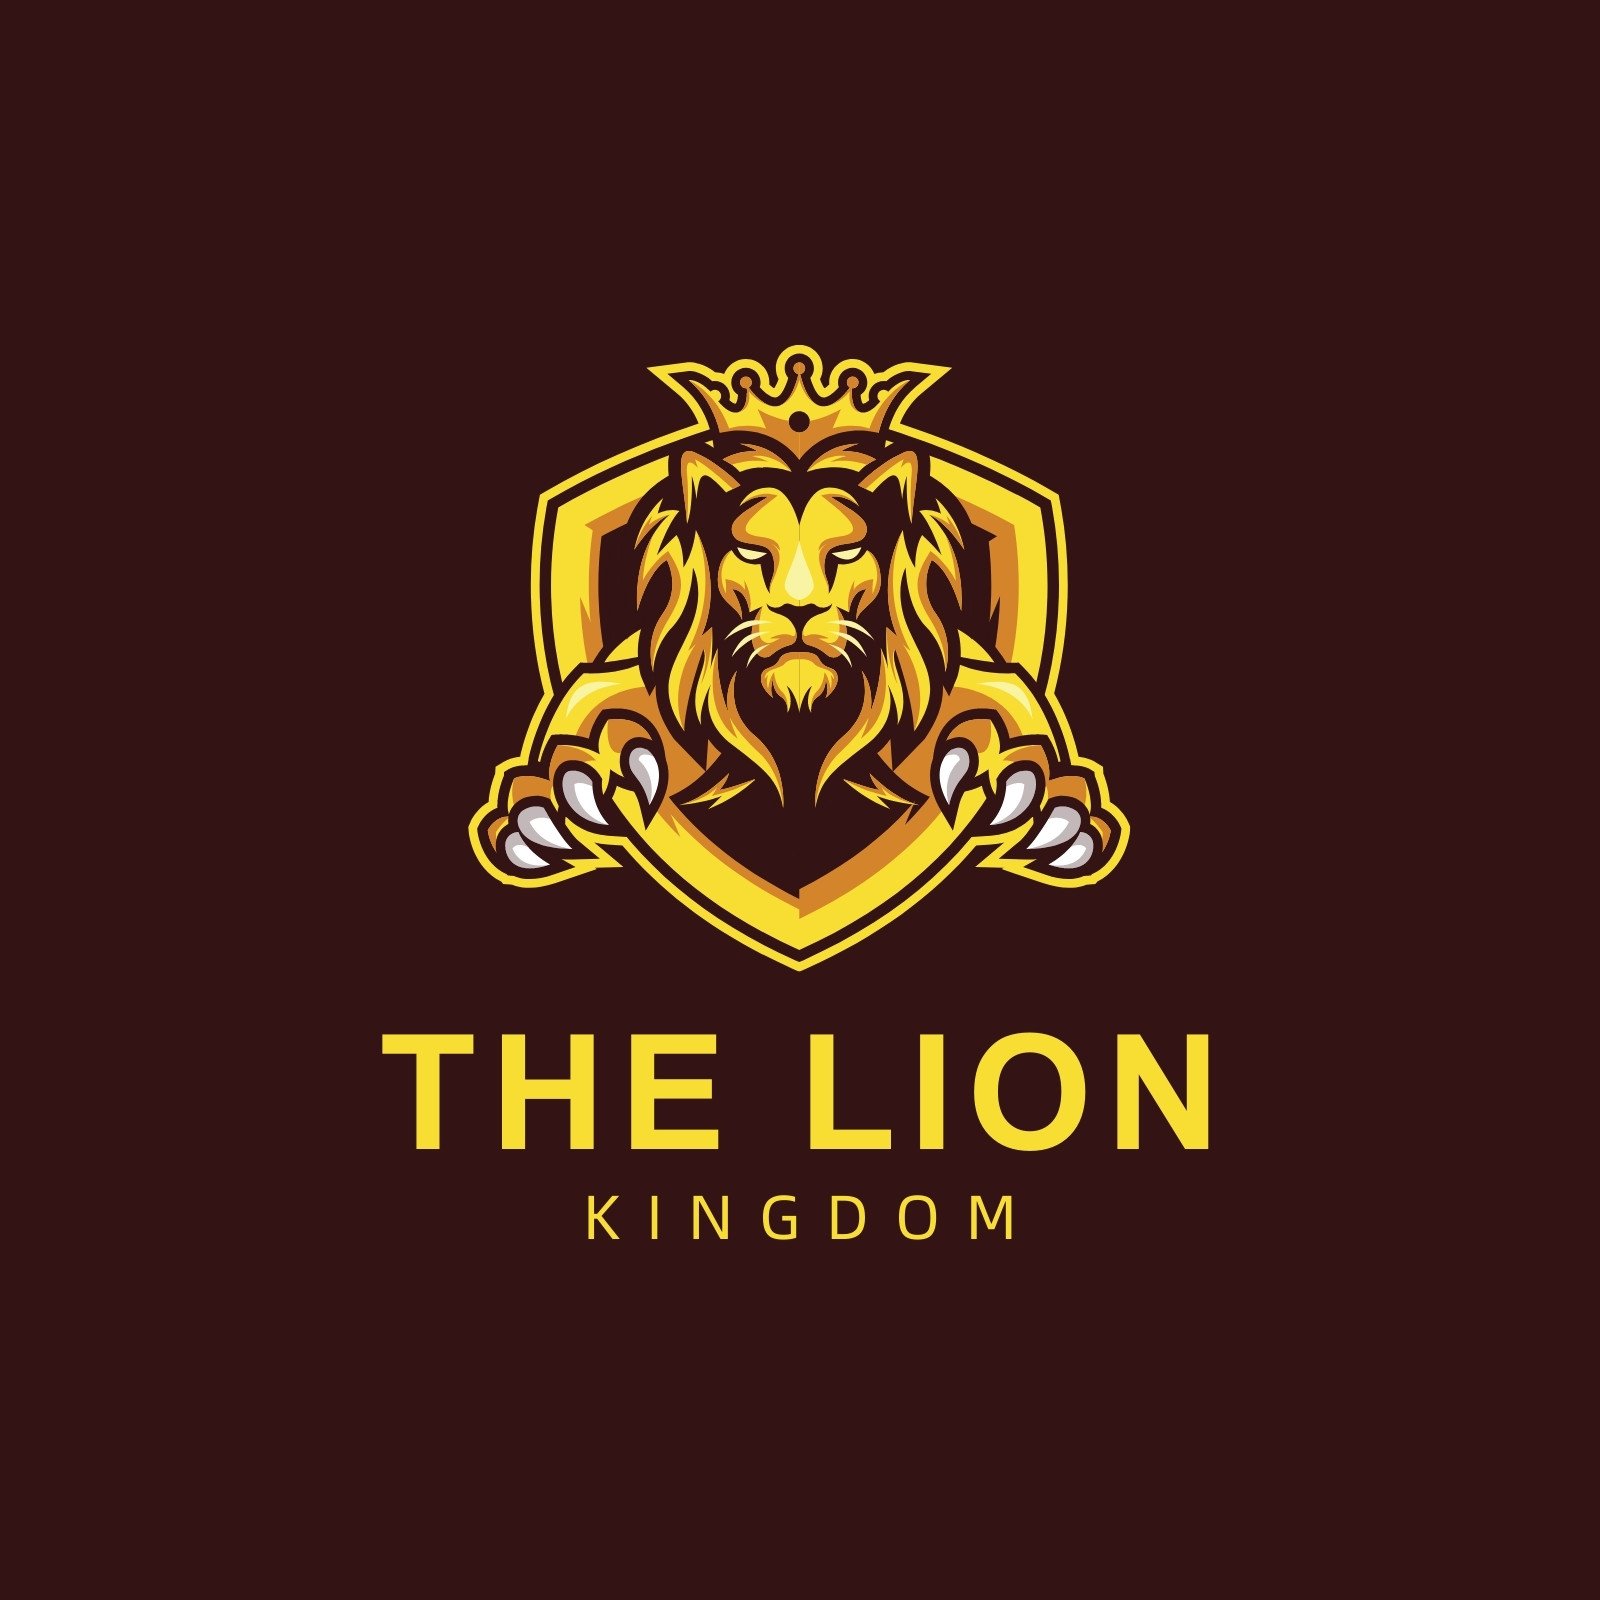 Bold, Conservative, Religious Logo Design for Kingdom Church by Graphic  Bricks | Design #22834051